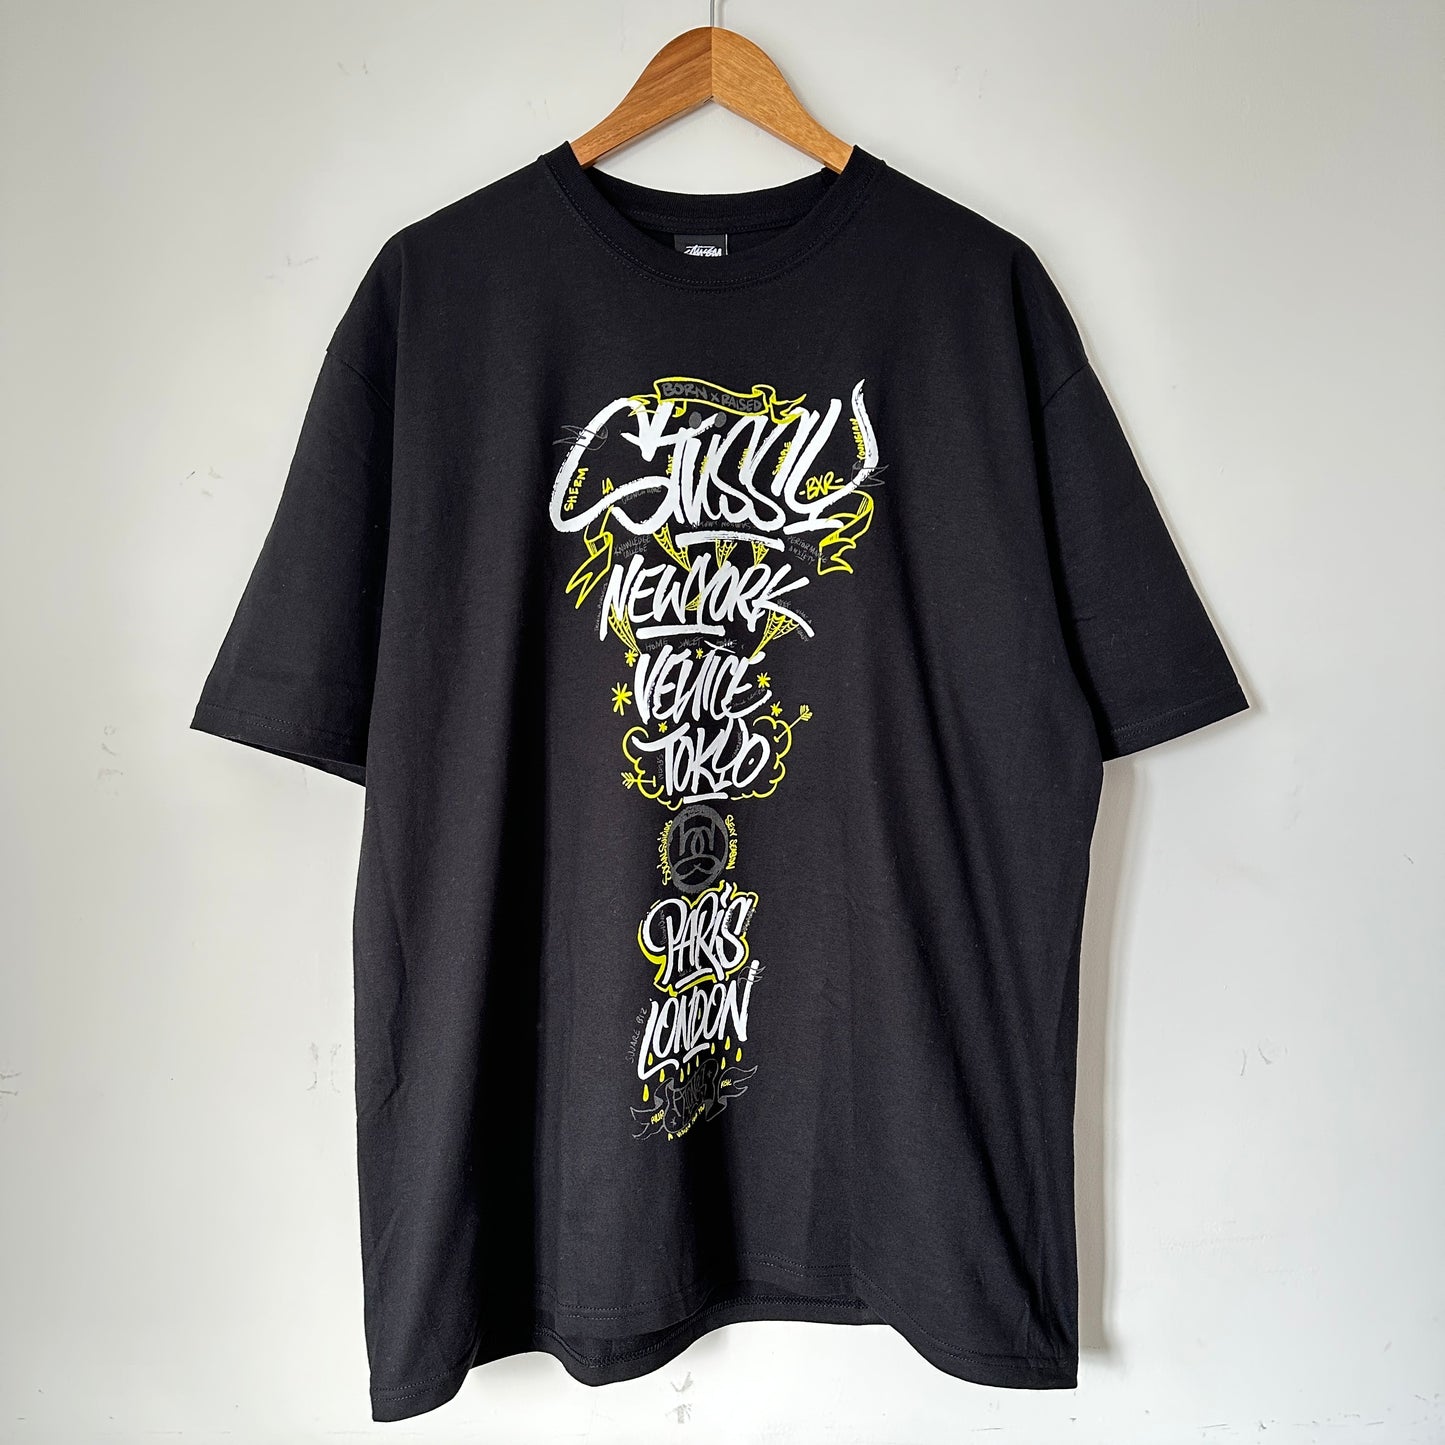 Stussy x Born & Raised Collaboration 8 Hardstyles T-shirt